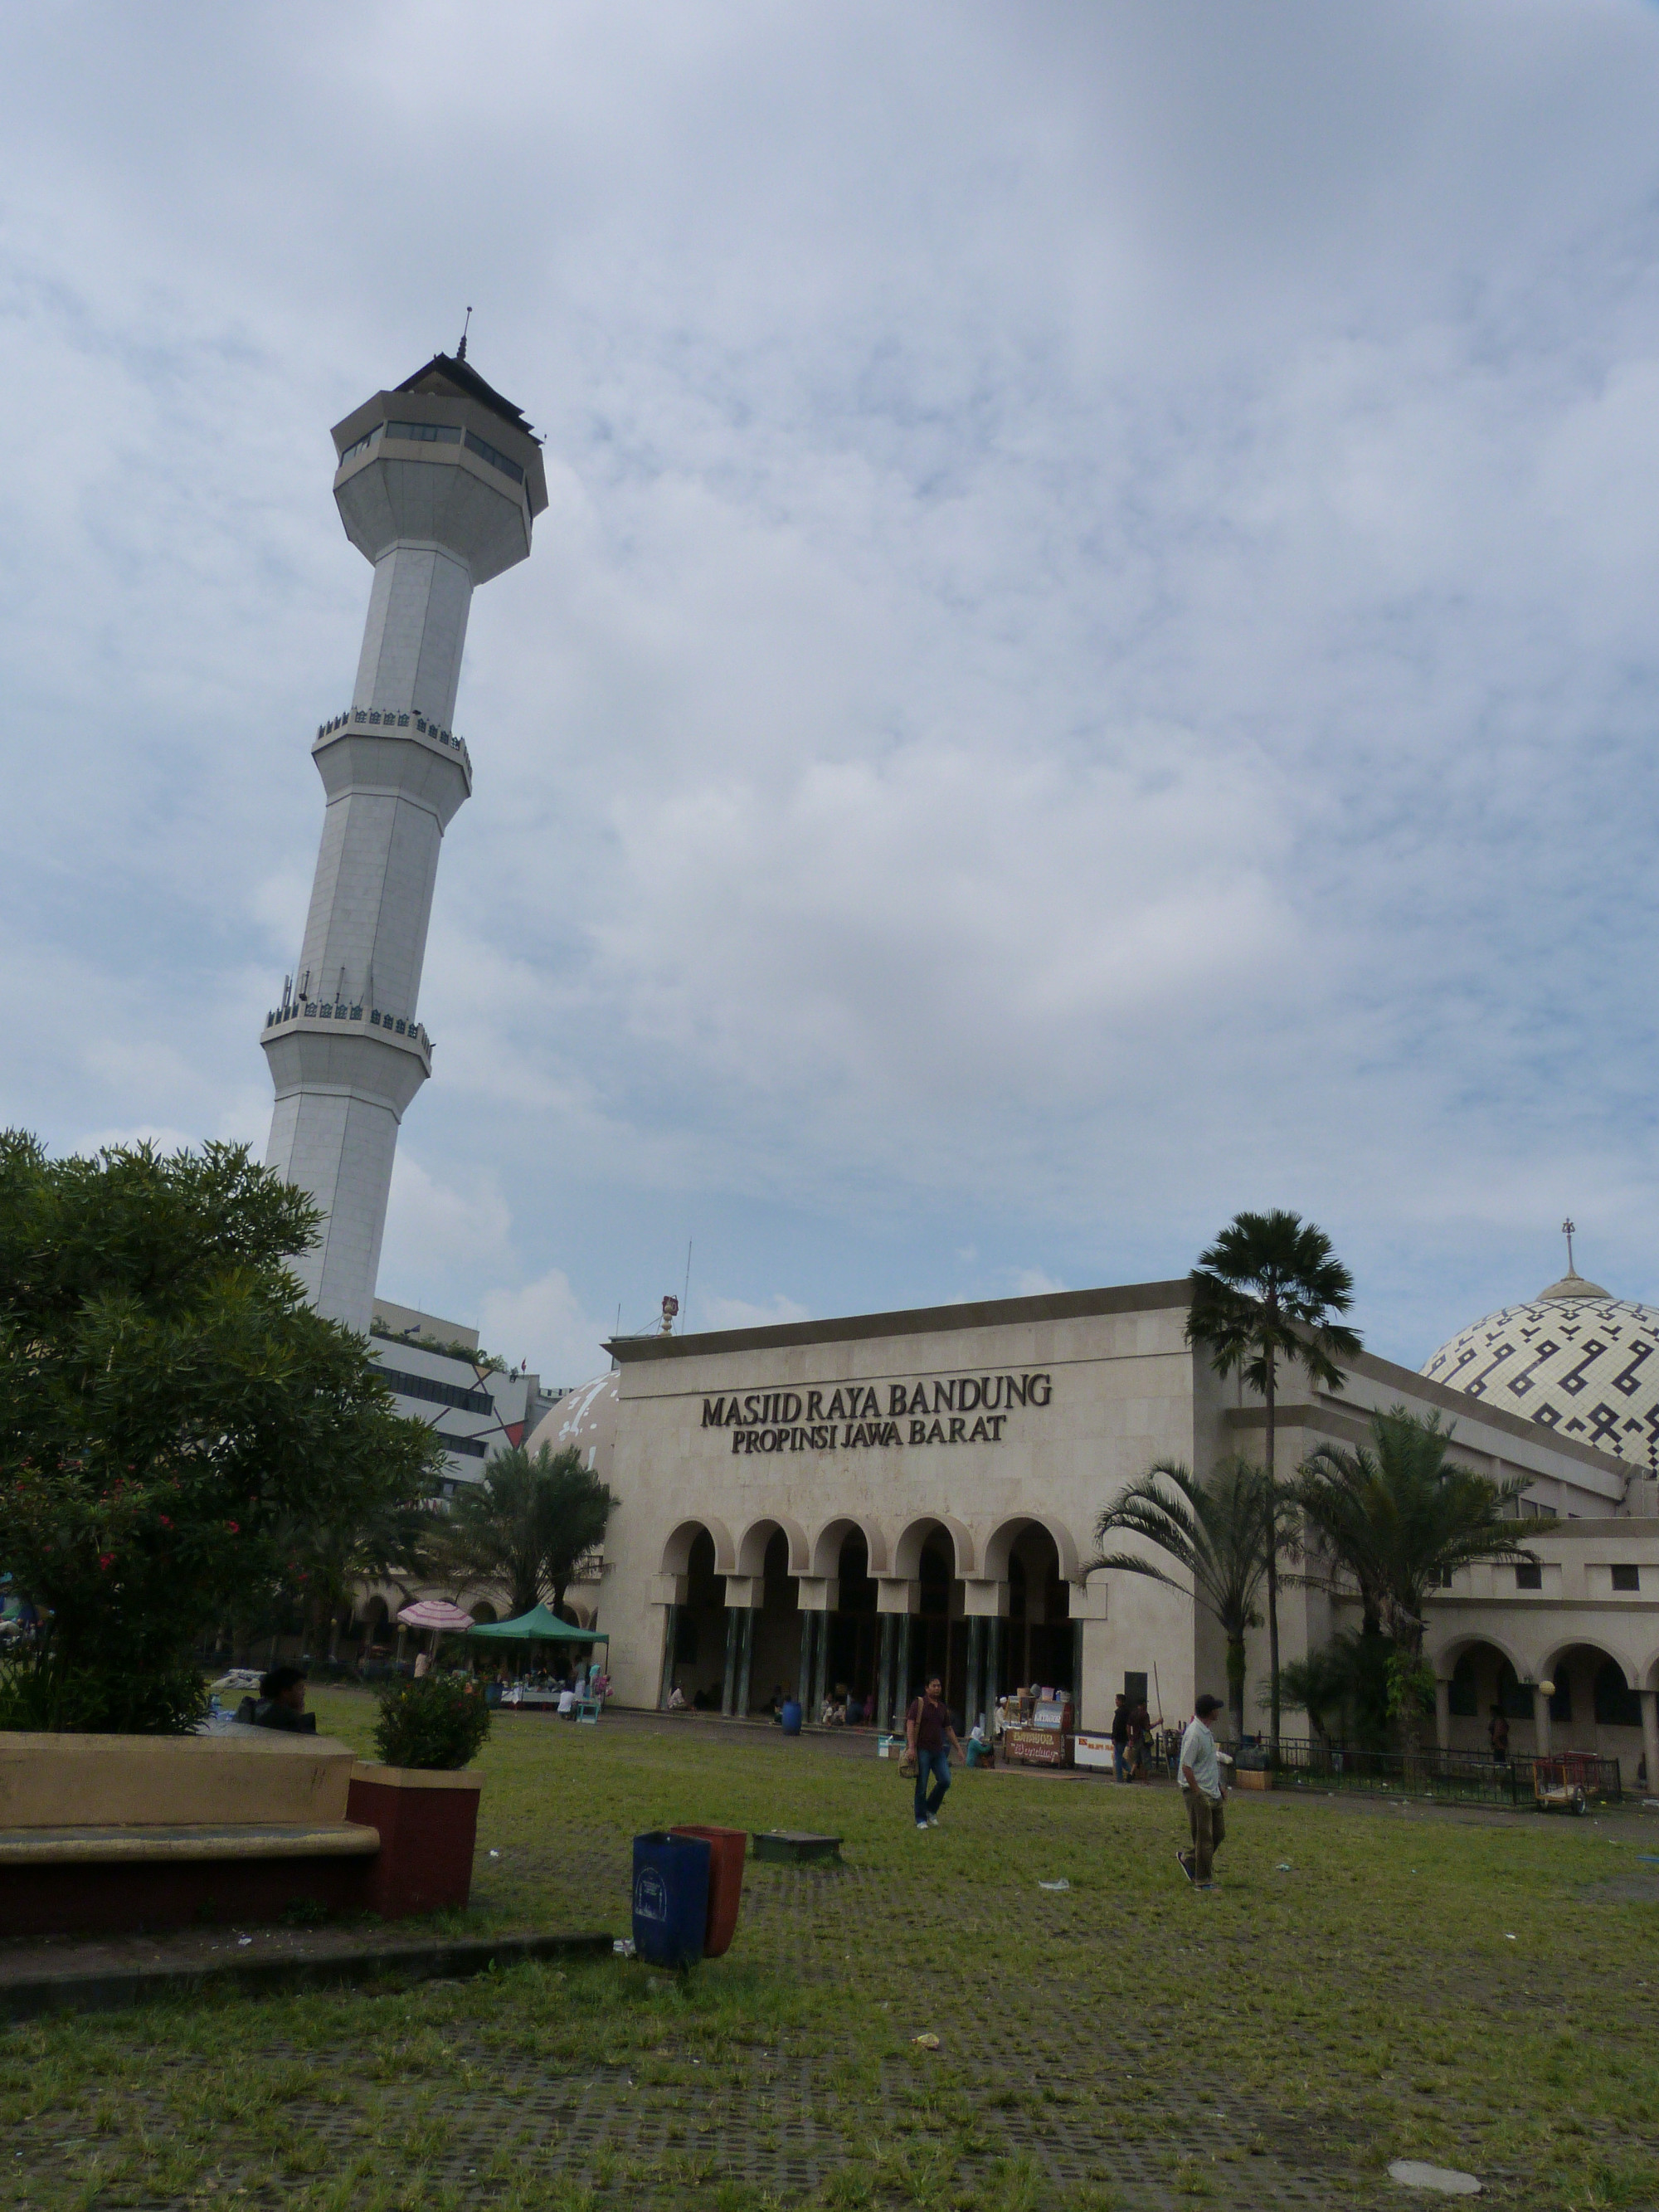 Masjid Raya Mosque<br/> <br/>
